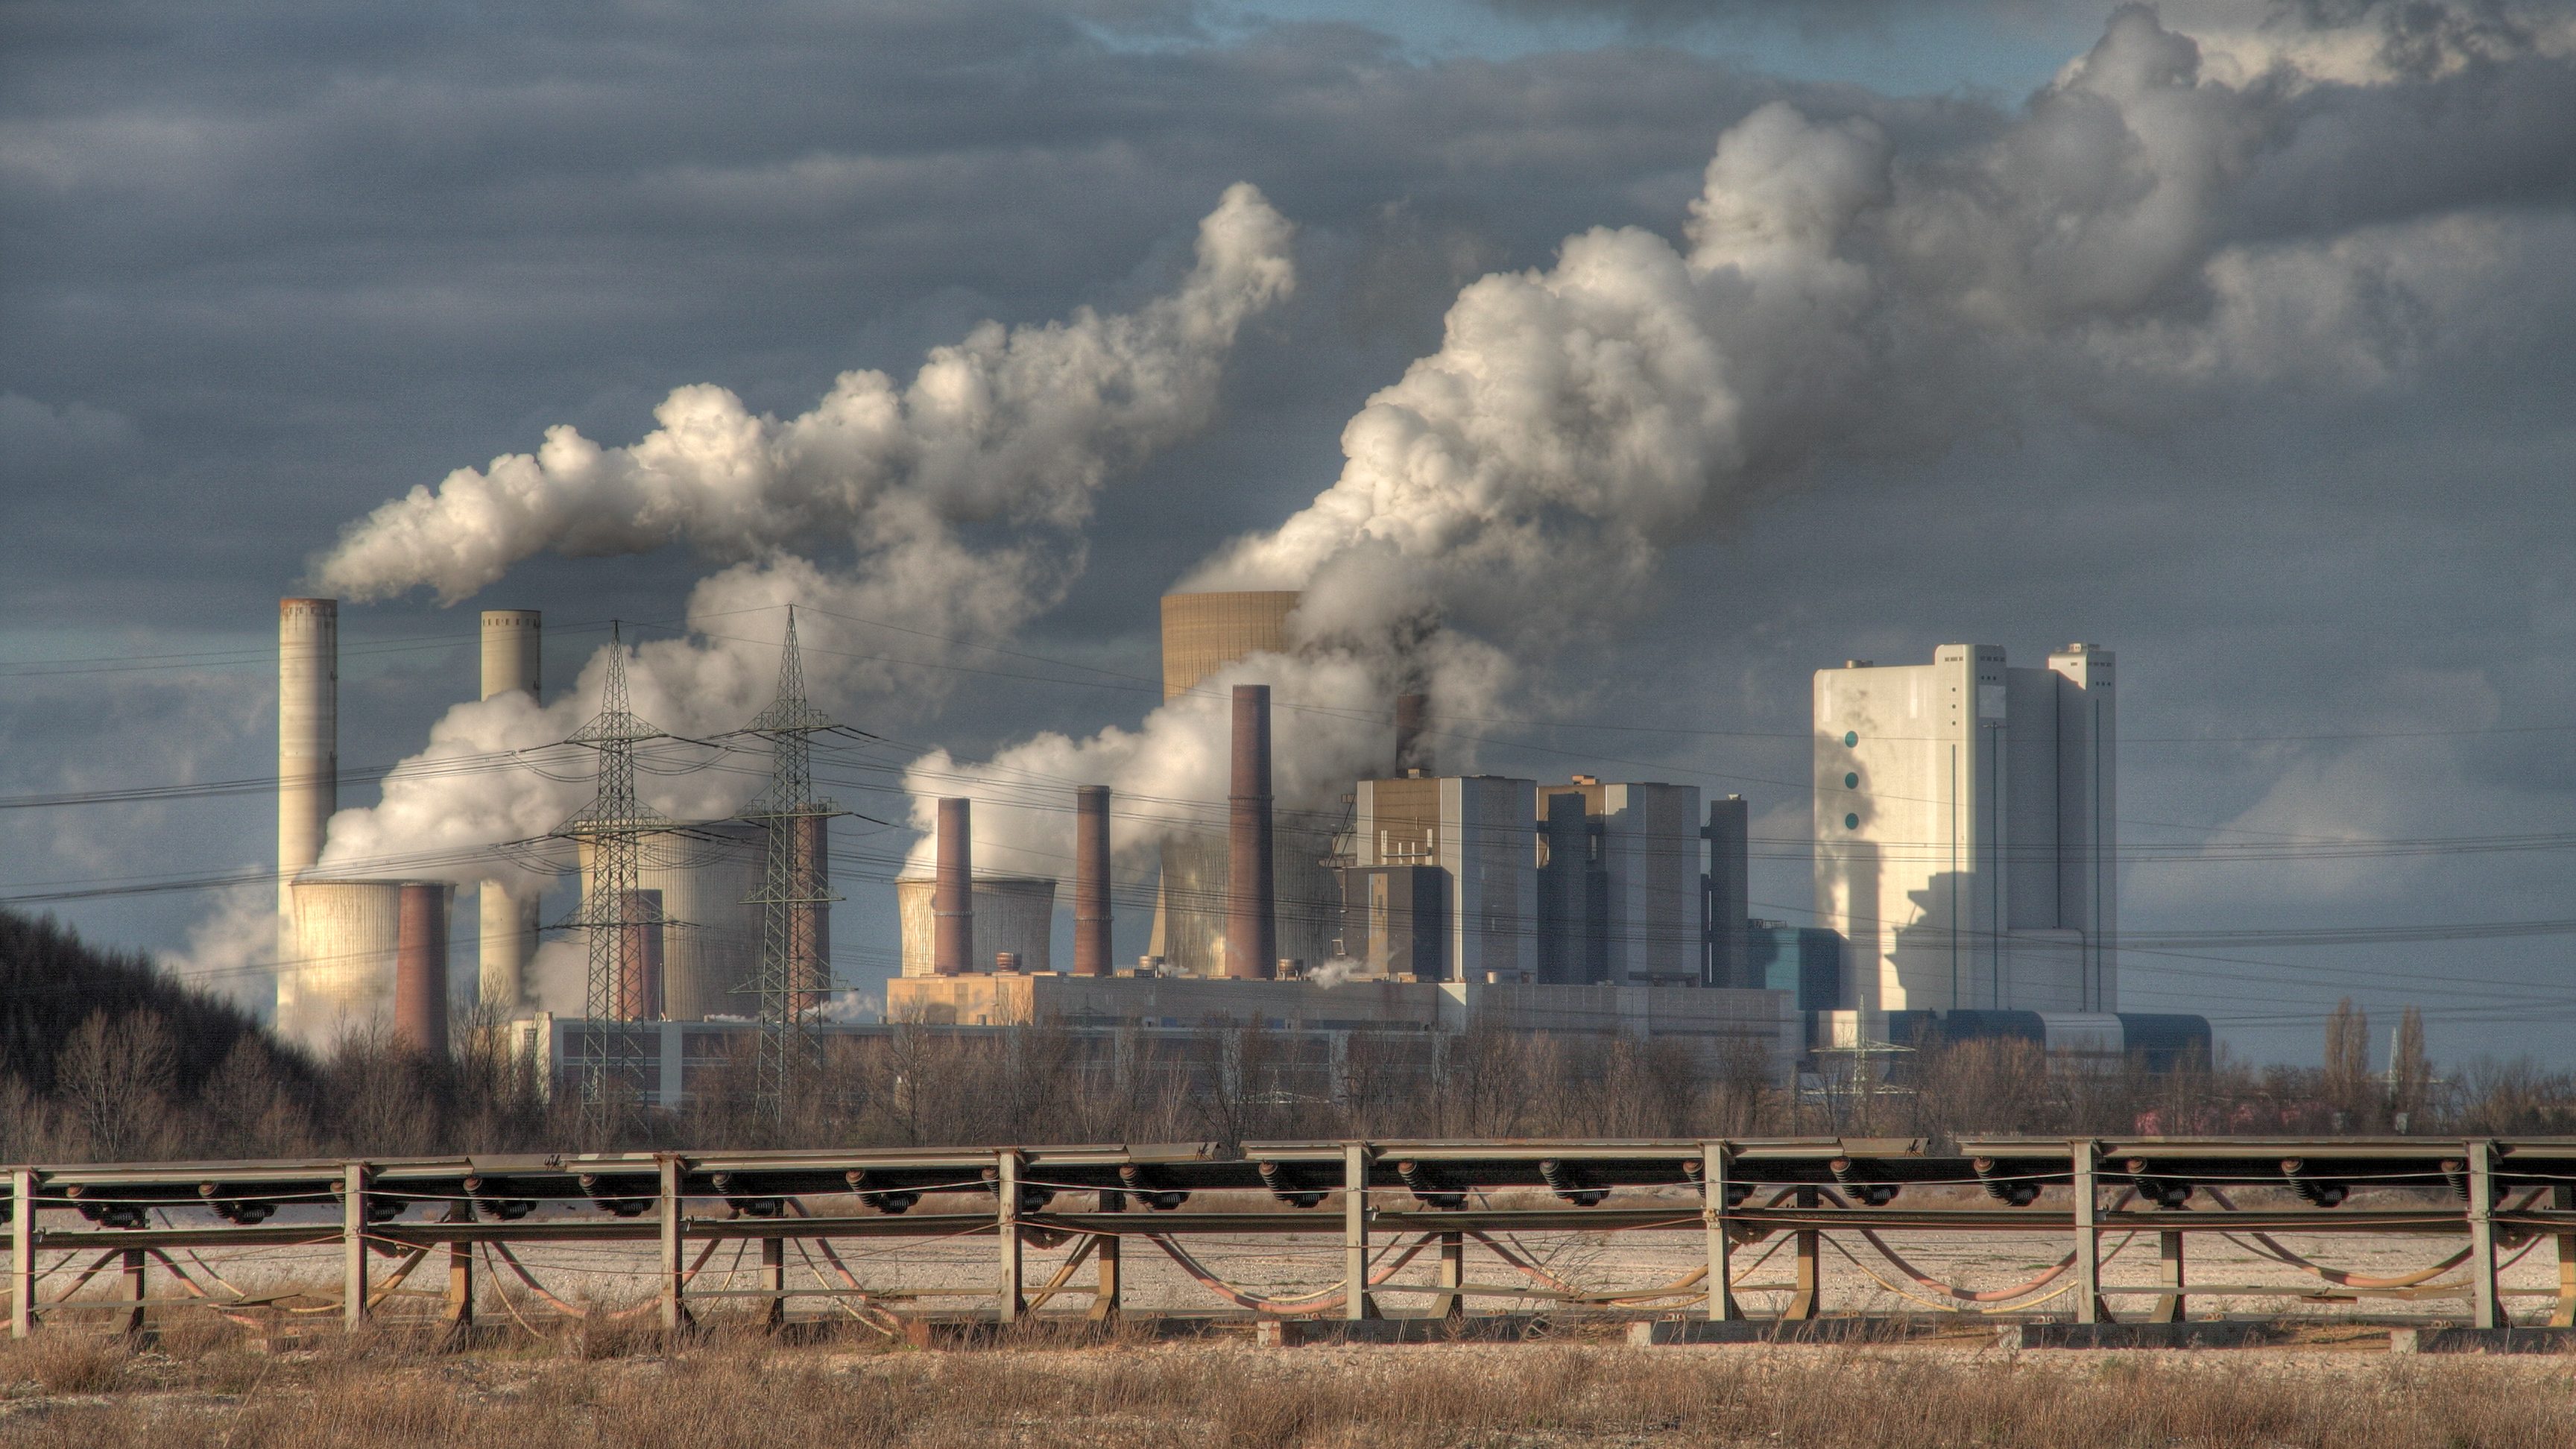 Coal plant. Burning Fossil fuels. Загрязнение воздушного бассейна. Фабрики загрязняют воздух. Заводы и фабрики загрязняют воздух.